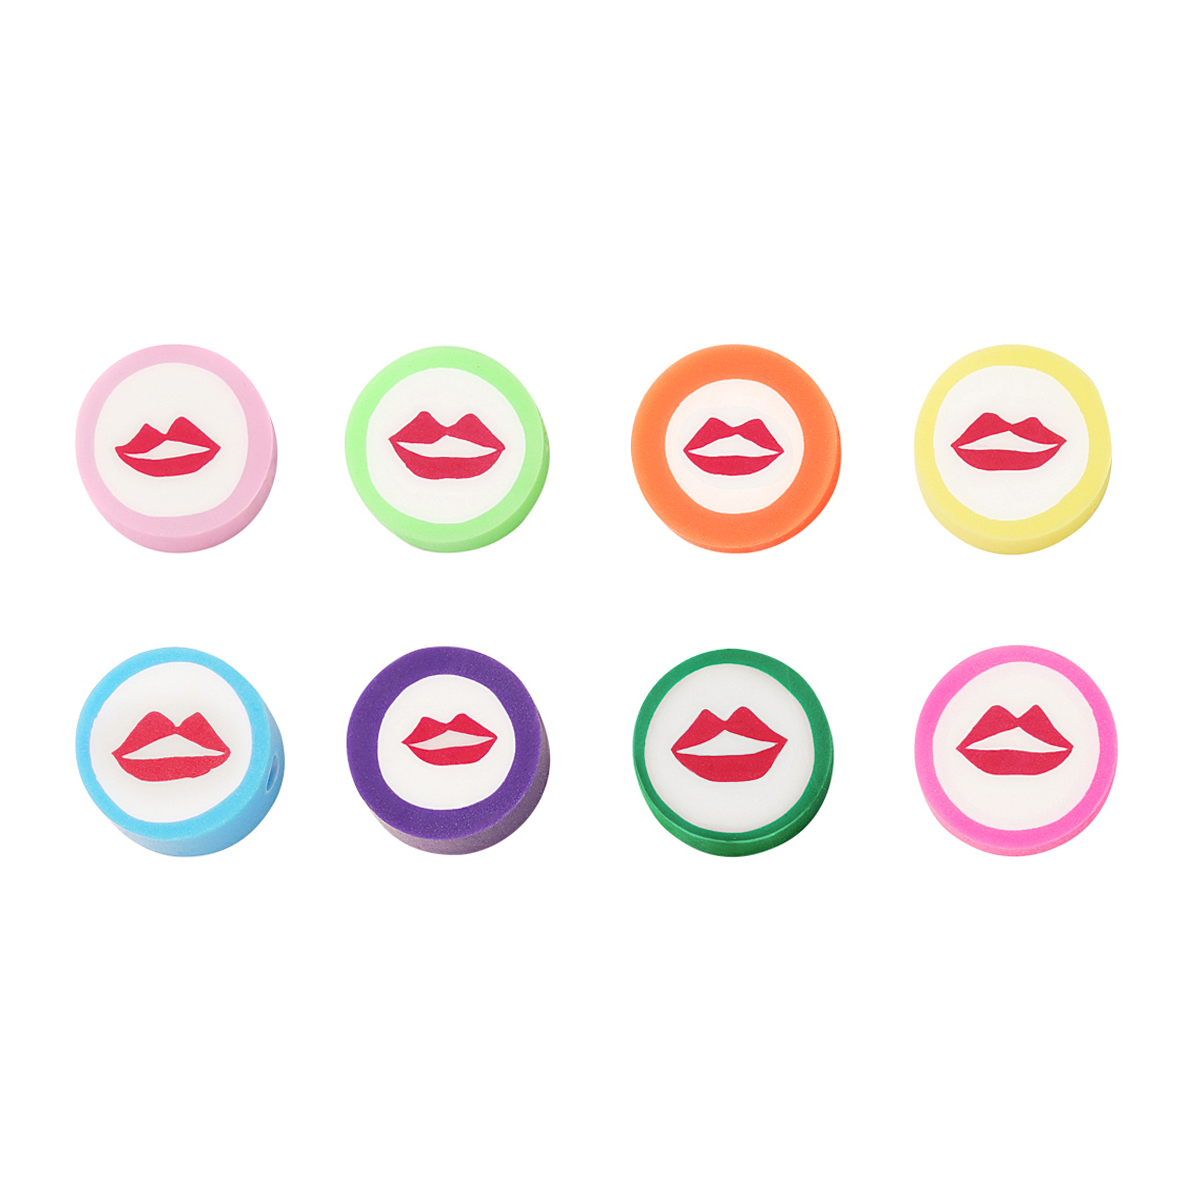 Lippen aus polymerperlen